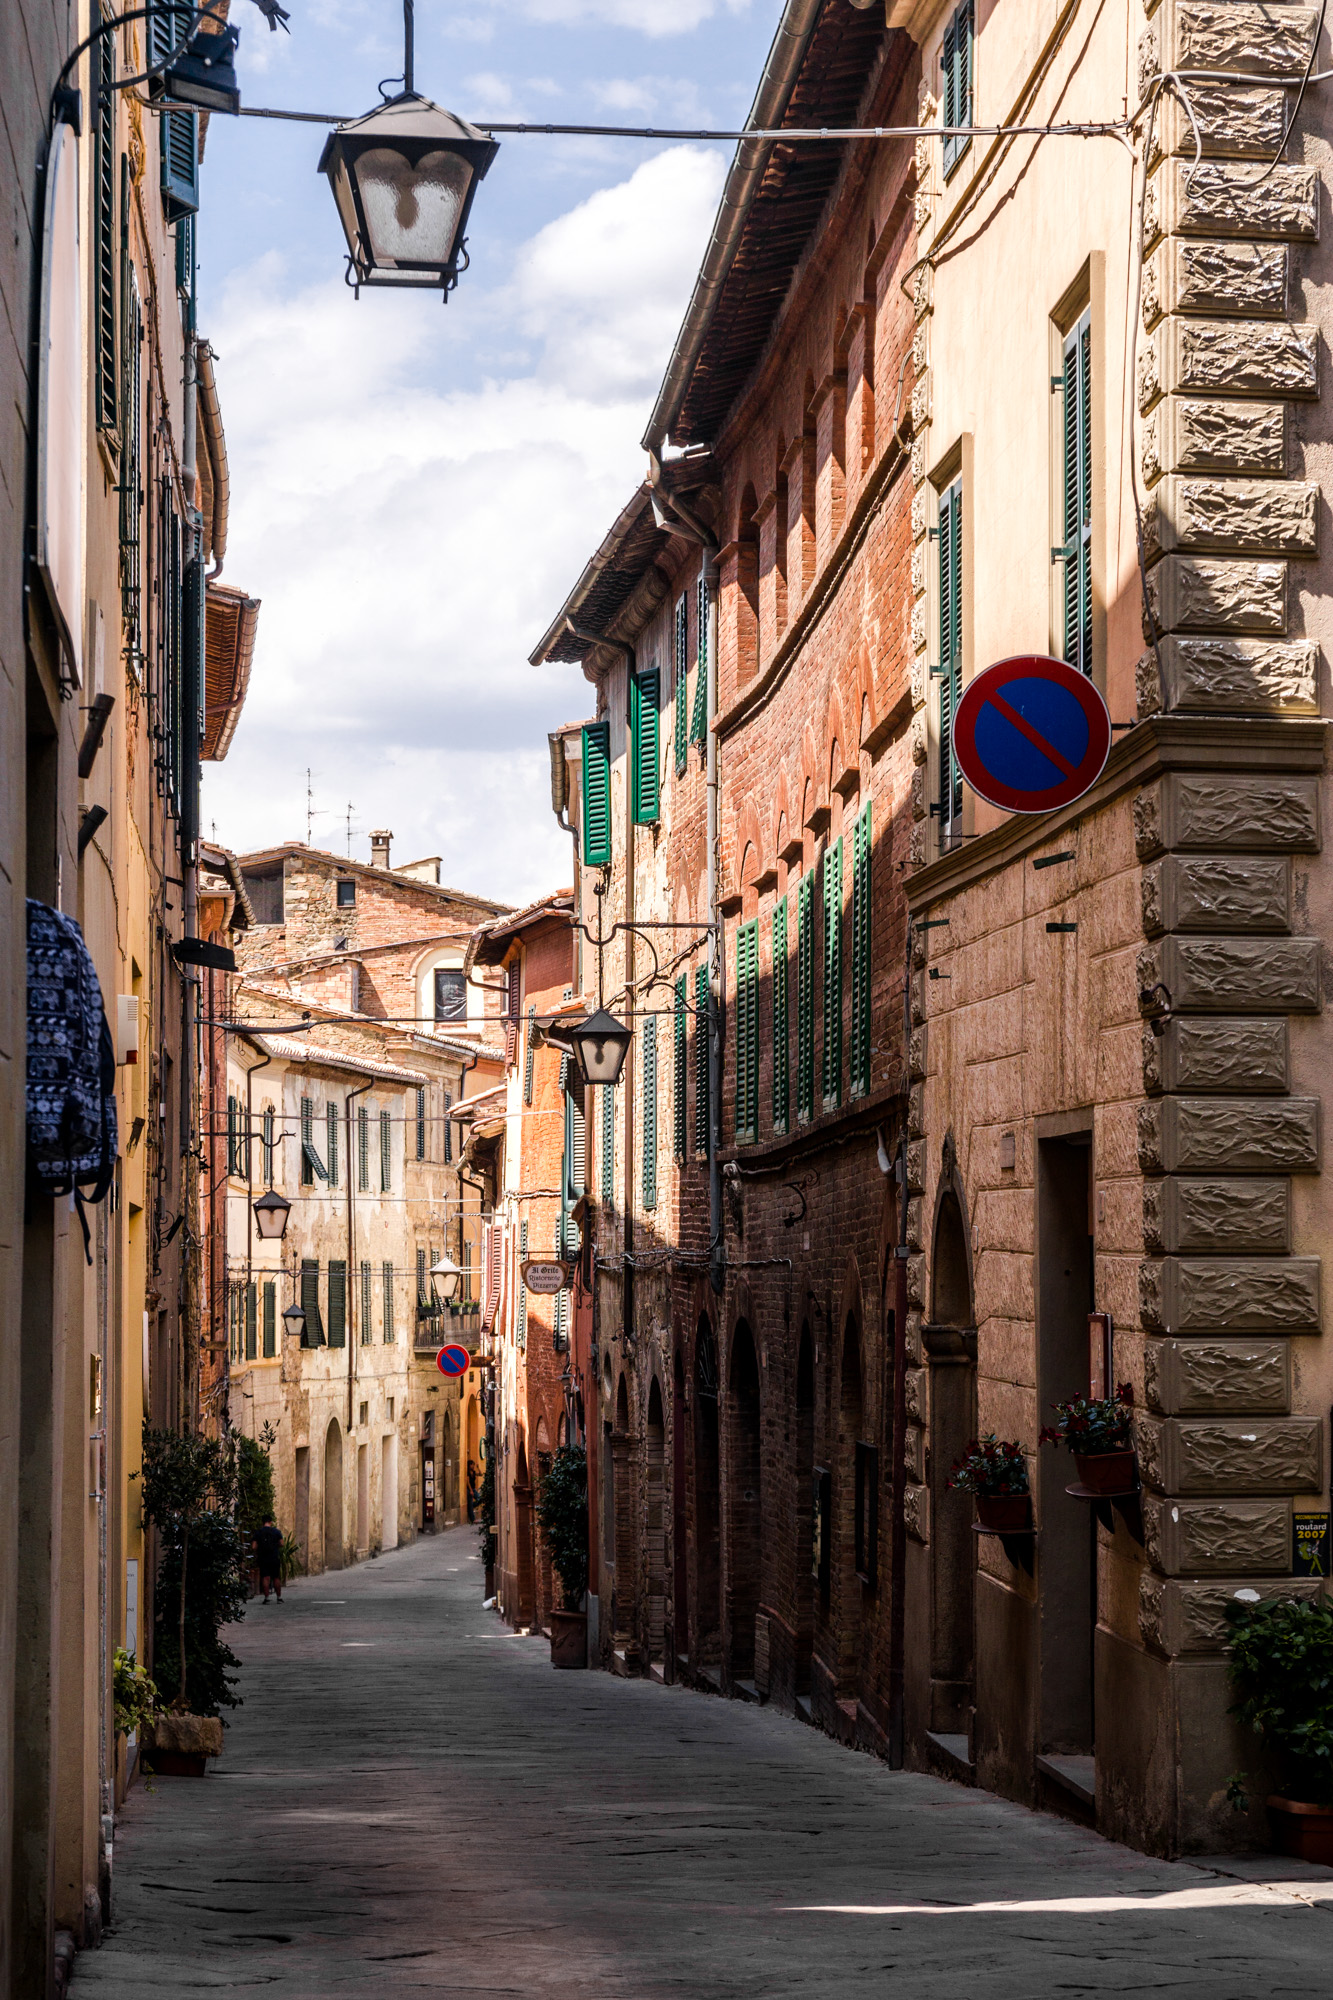 France/Italy roadtrip – Montalcino